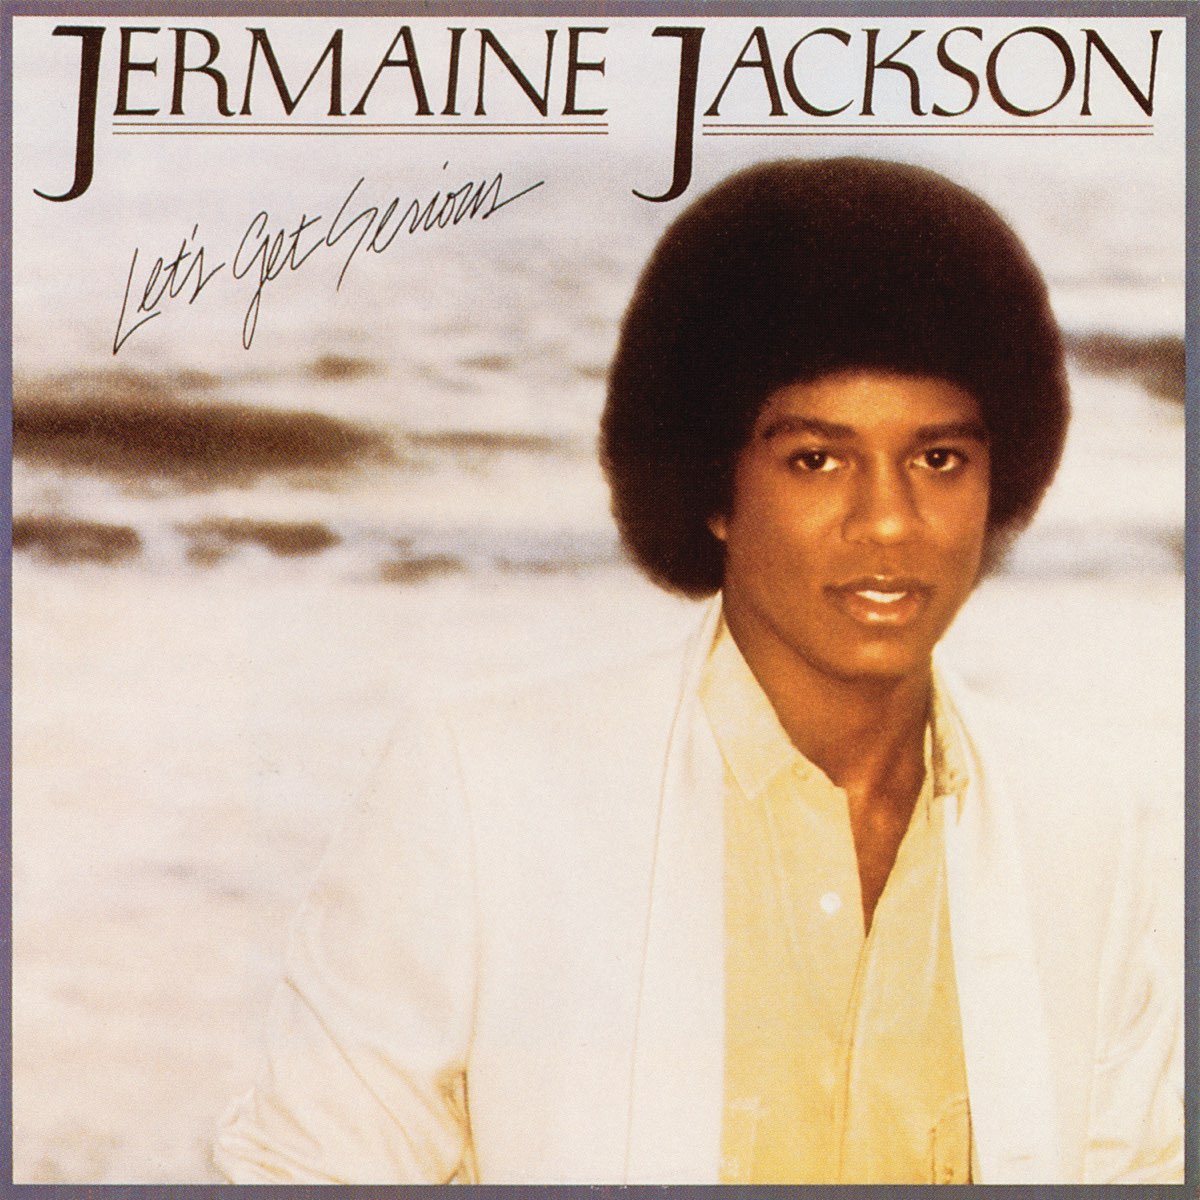 ‎Let's Get Serious - Album by Jermaine Jackson - Apple Music